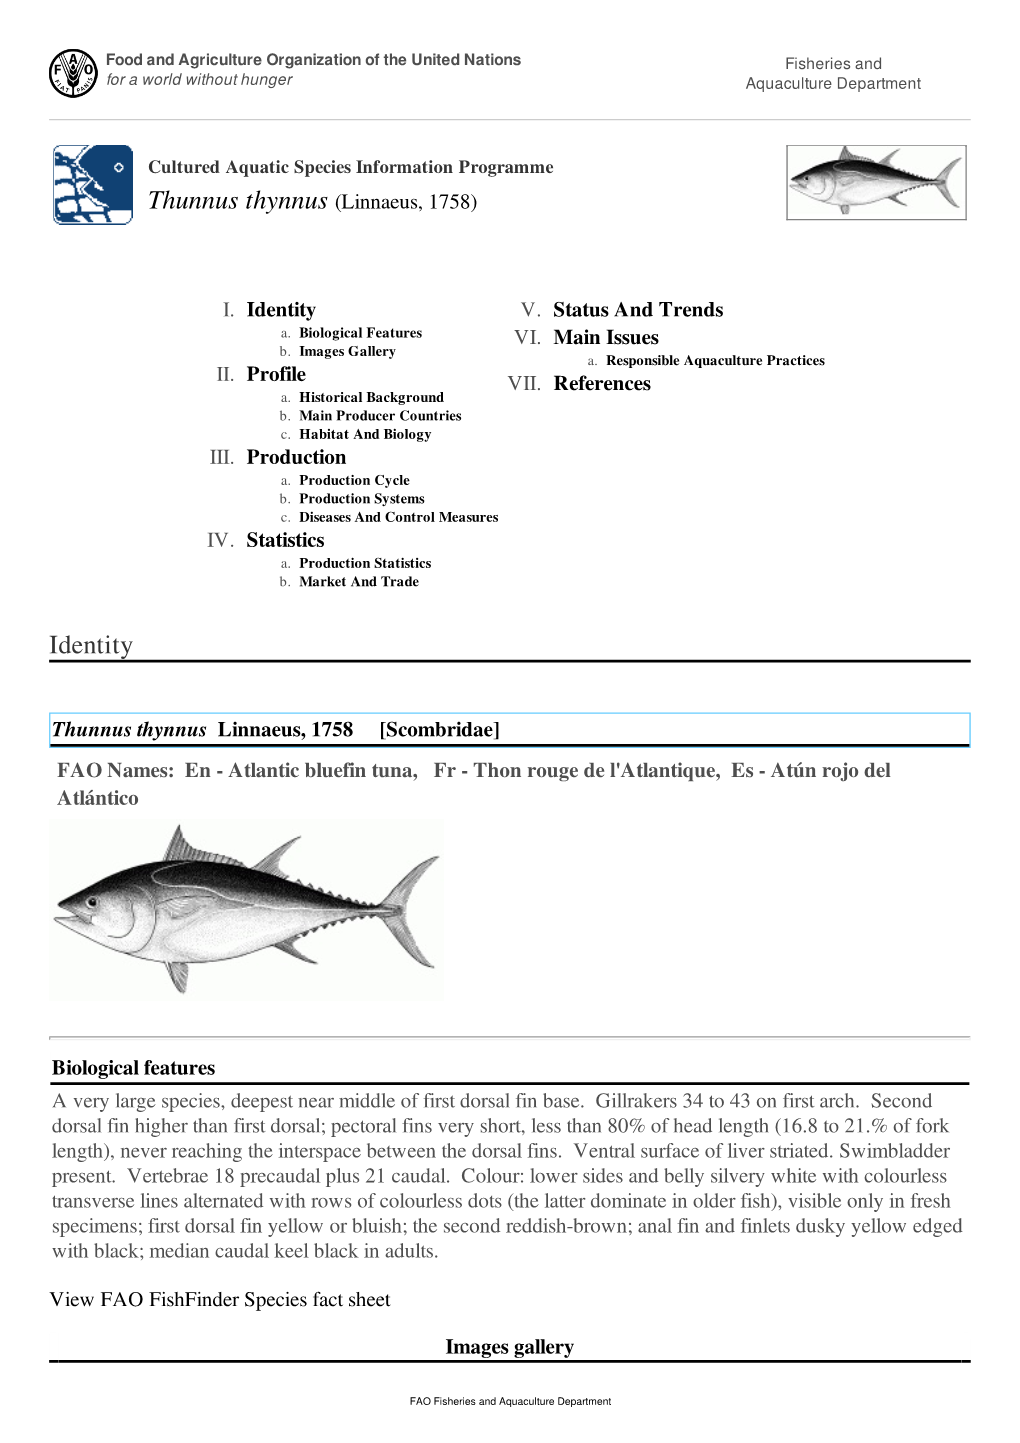 FAO Fisheries & Aquaculture